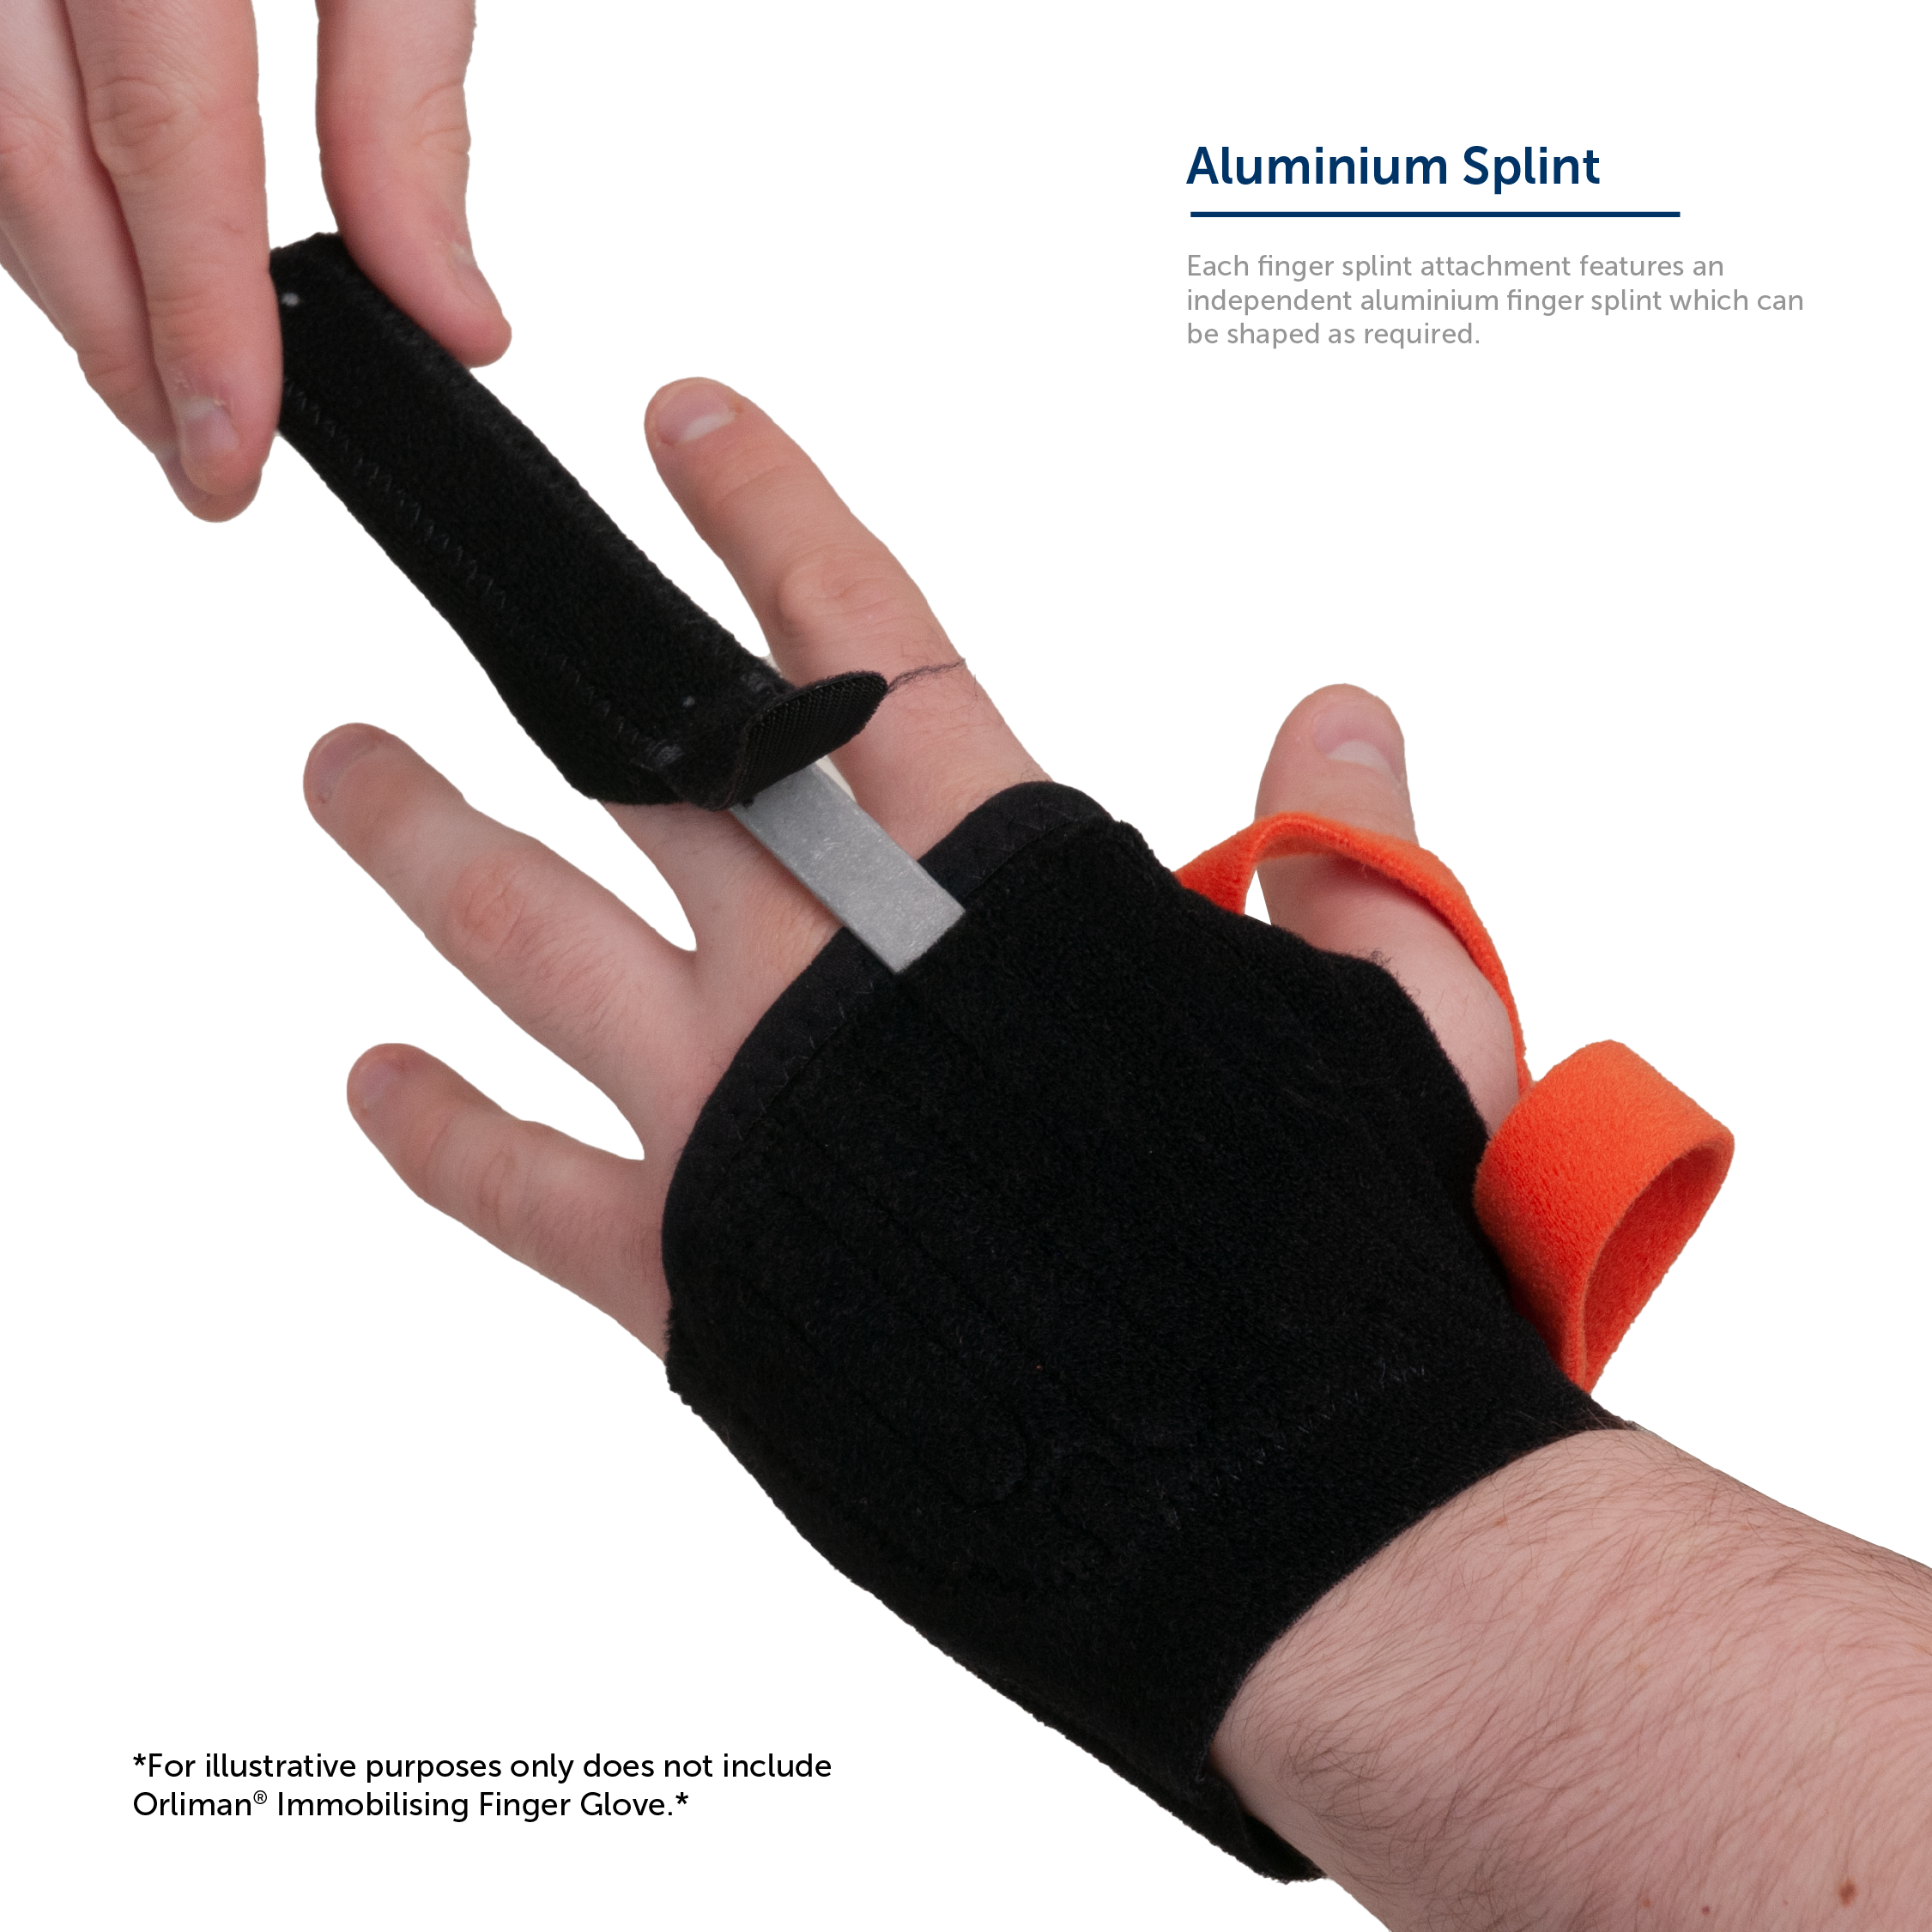 Immobilising Finger Glove Splint Attachment